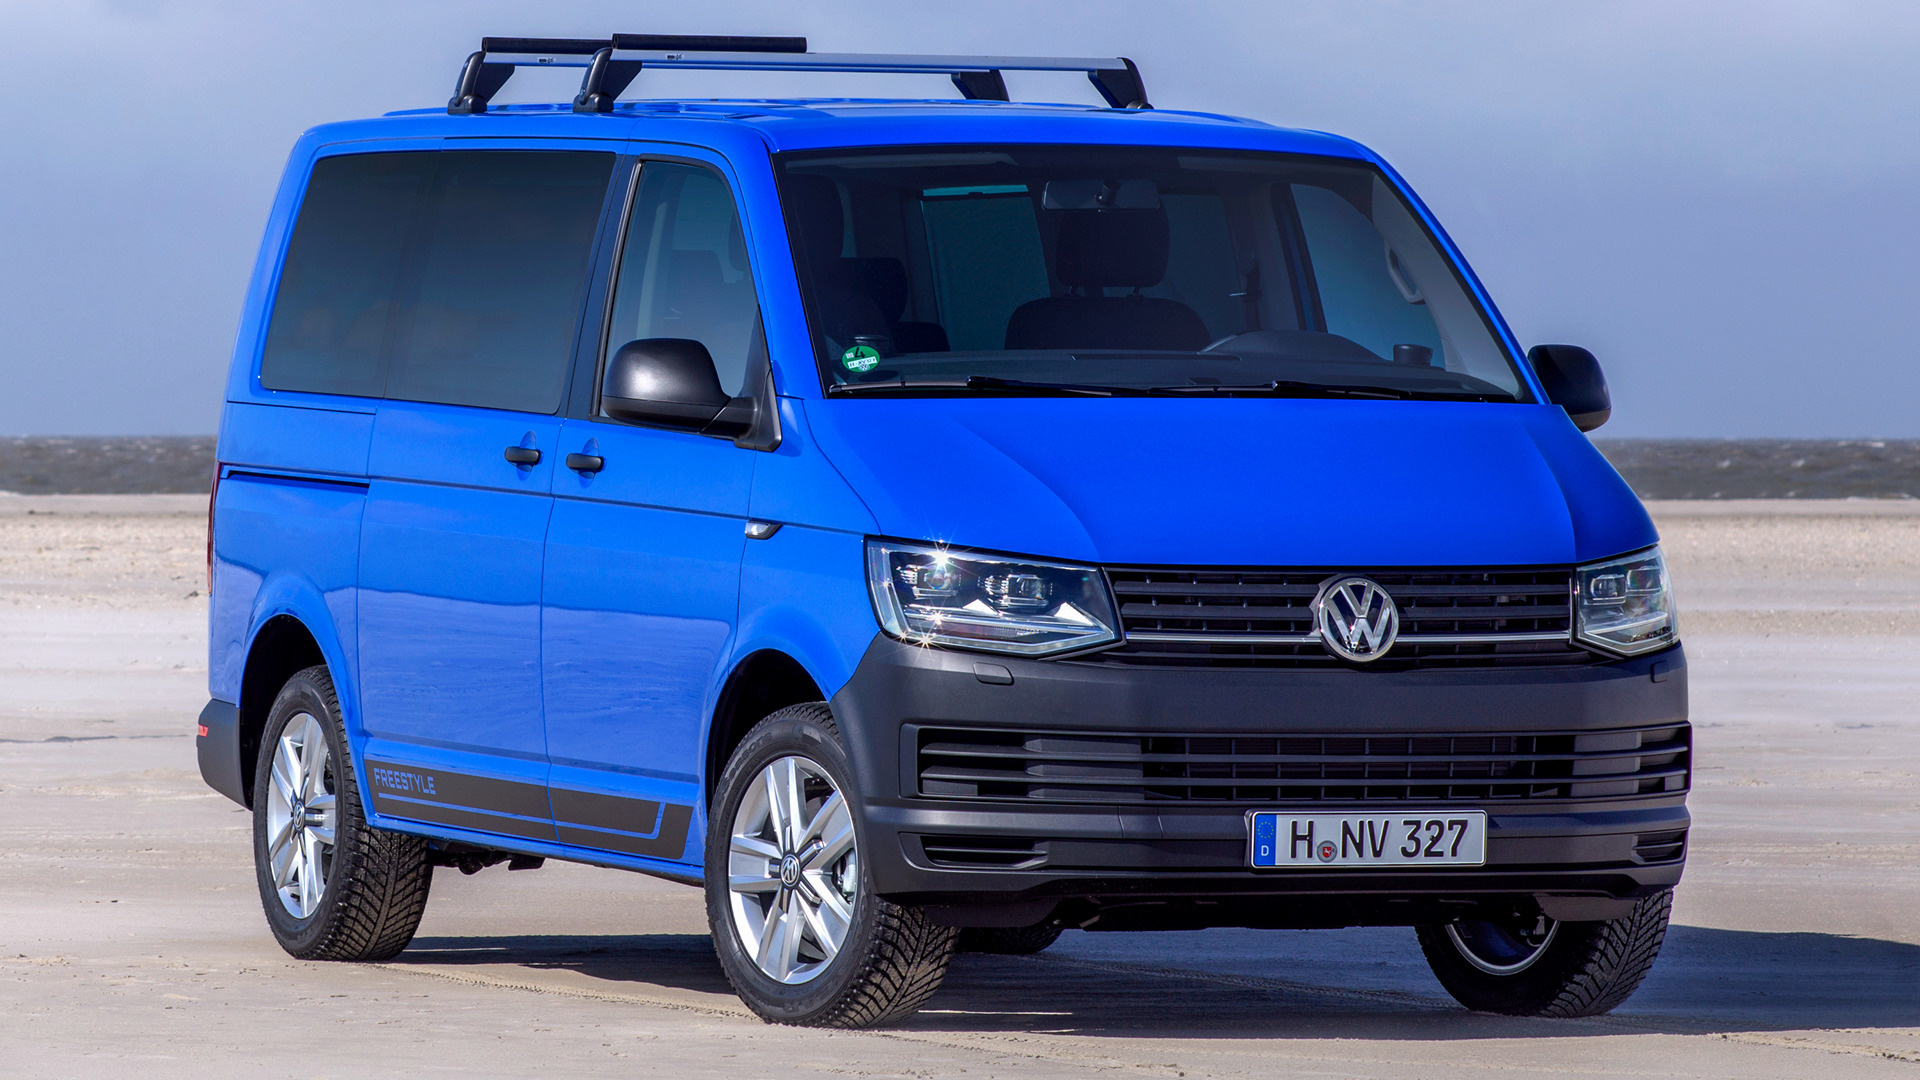 Завантажити шпалери Volkswagen Multivan на телефон безкоштовно